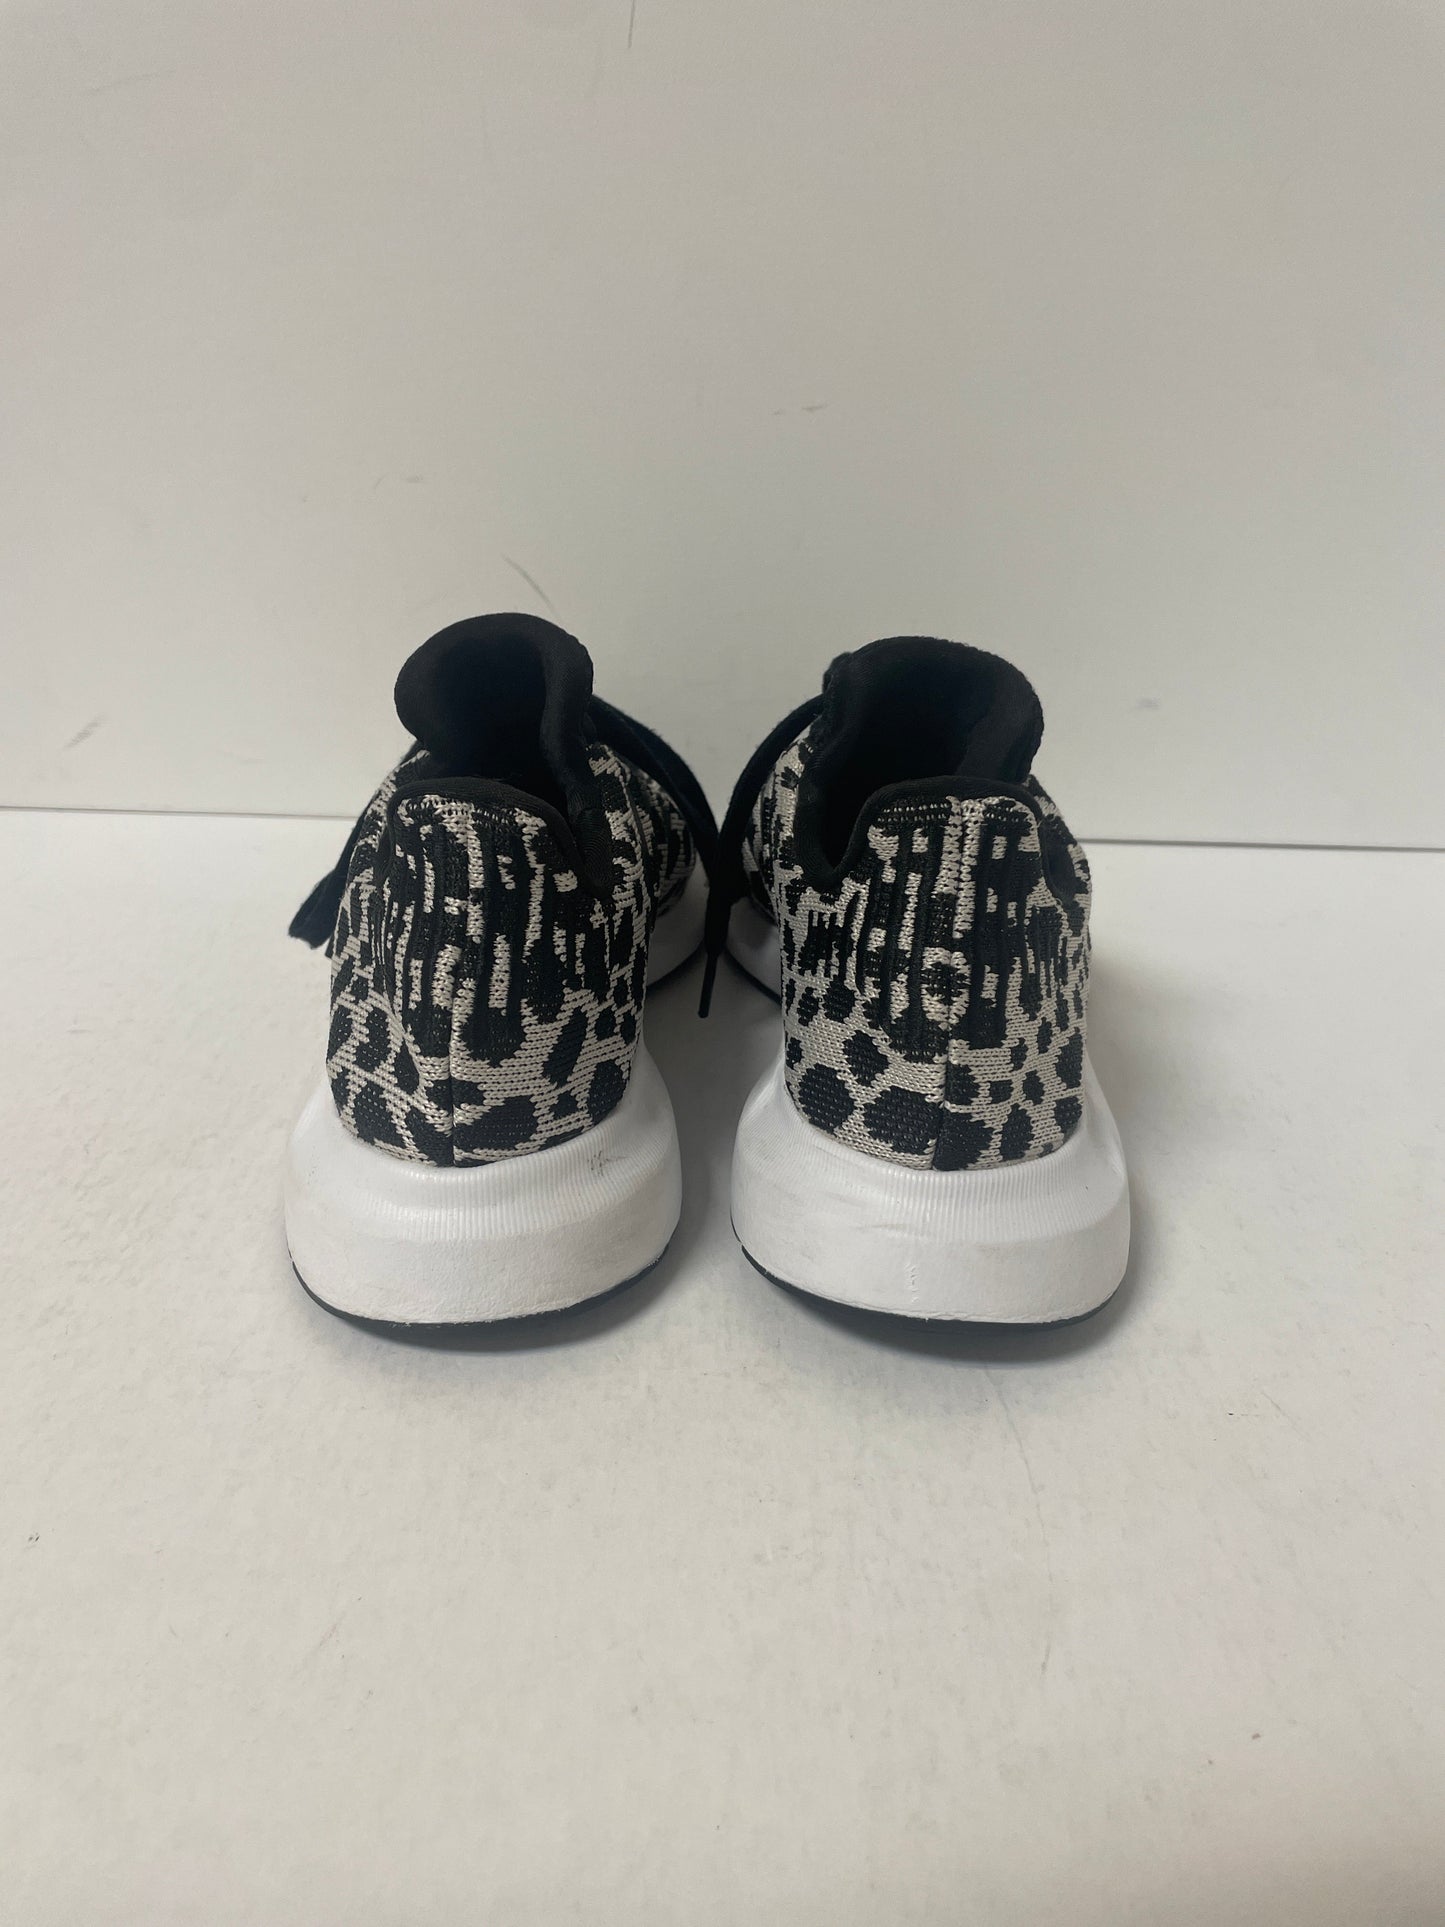 Animal Print Shoes Athletic Adidas, Size 7